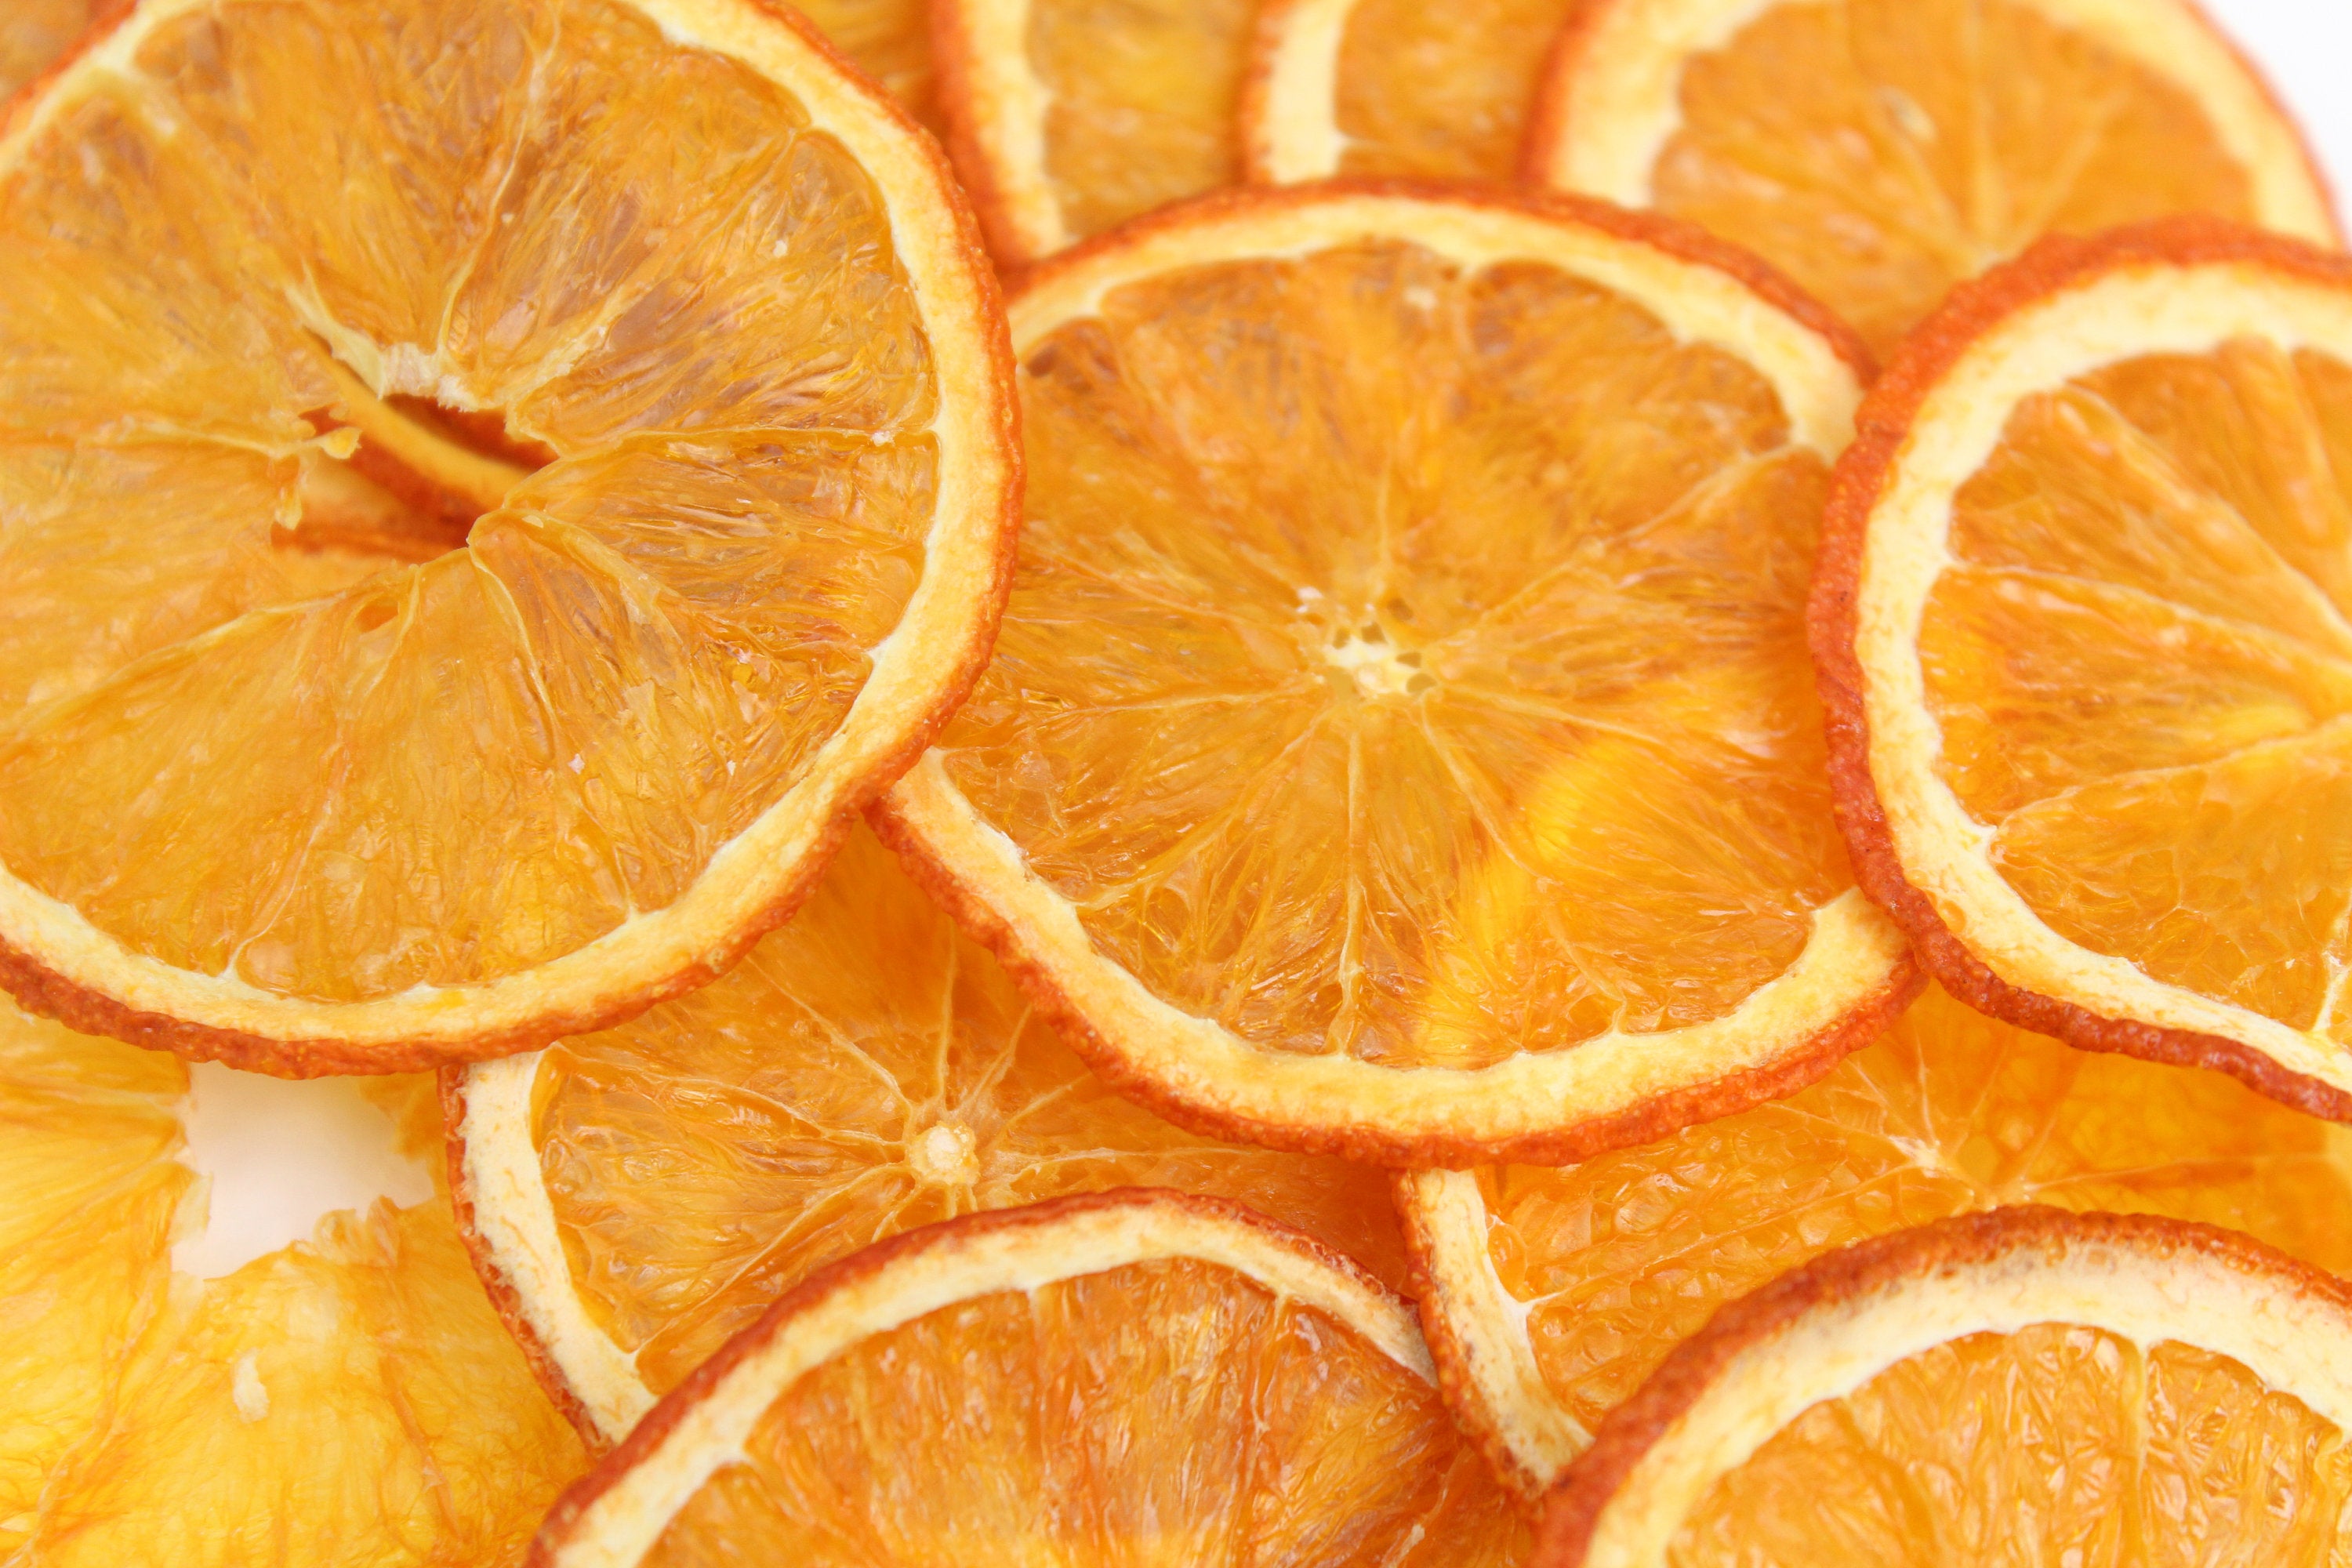 Free 50 Dried Organic Homemade Fruits, 10 pcs of Each Grapefruit , Lime, Lemon, Tangerine (Mandarin) and Orange Slices, Fragrance and Colors Free